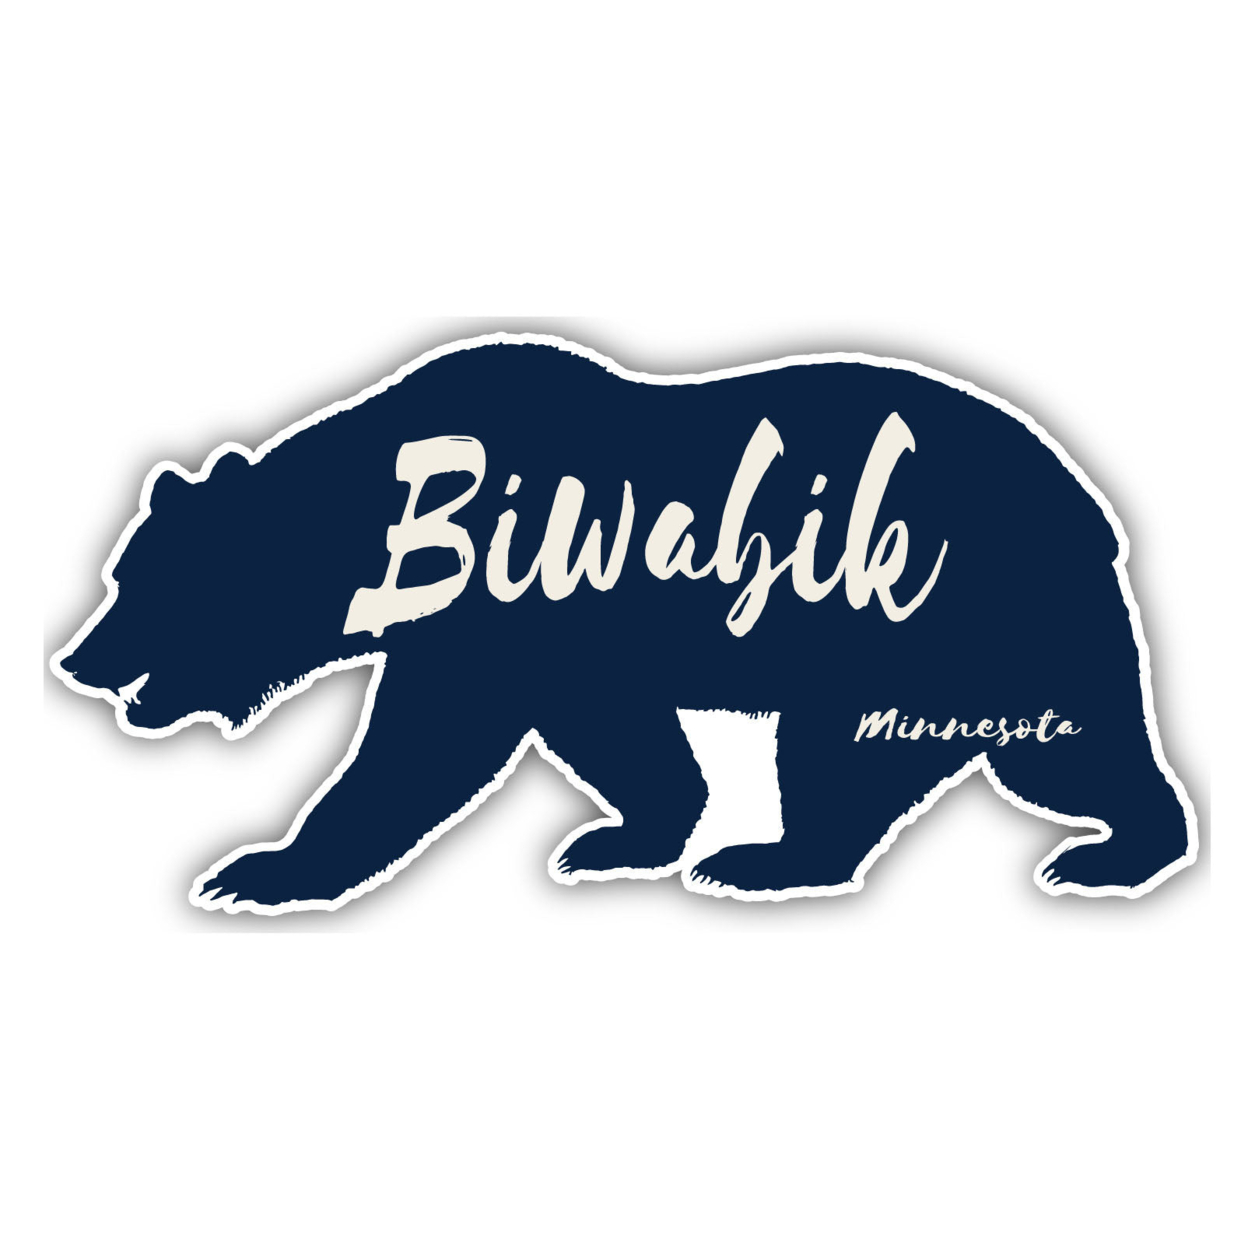 Biwabik Minnesota Souvenir Decorative Stickers (Choose Theme And Size) - Single Unit, 8-Inch, Tent